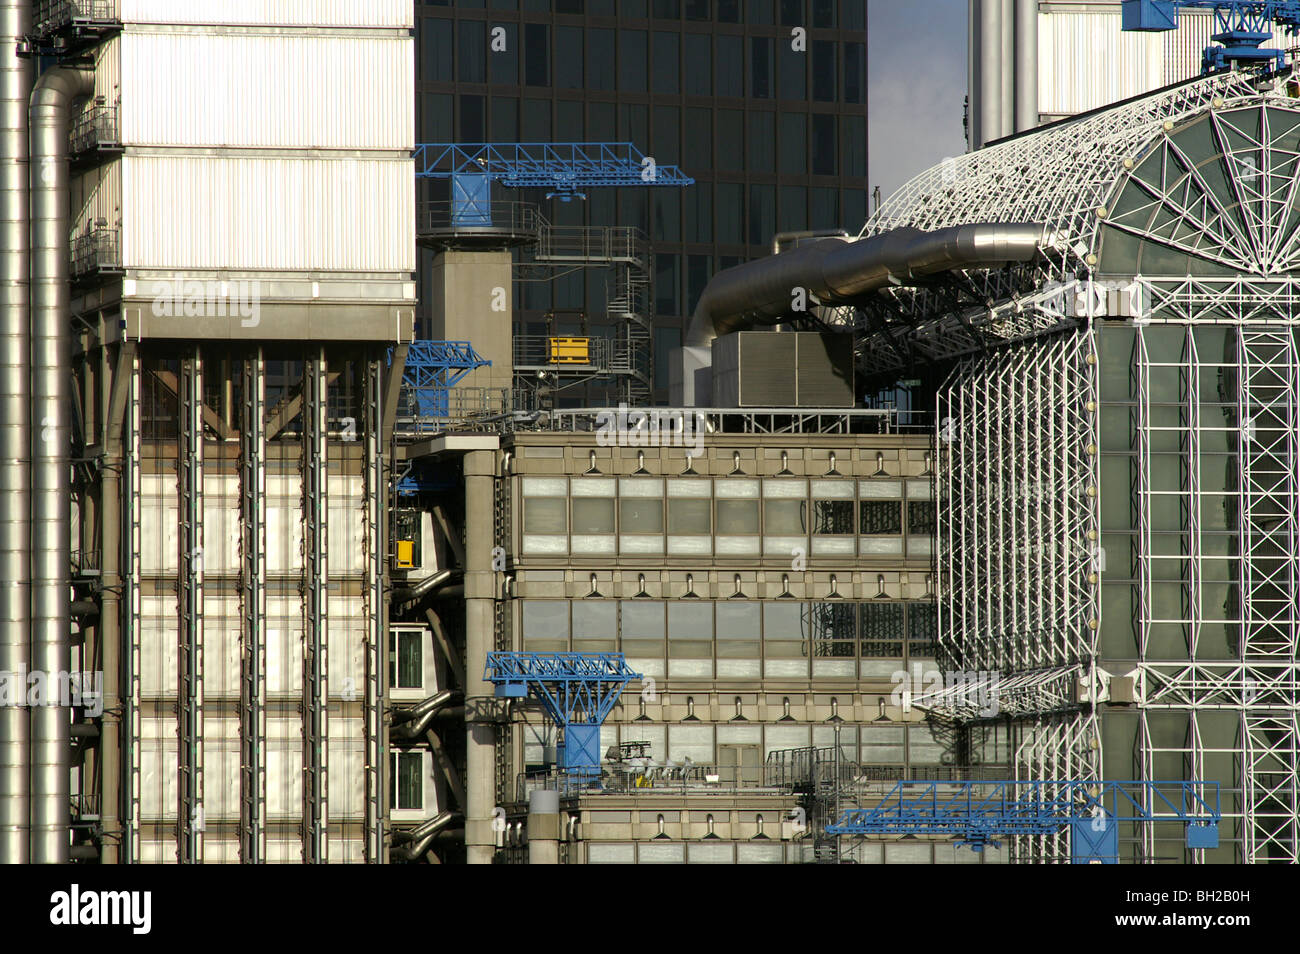 Moderne, industrielle Architektur - Lloyds building Stockfoto